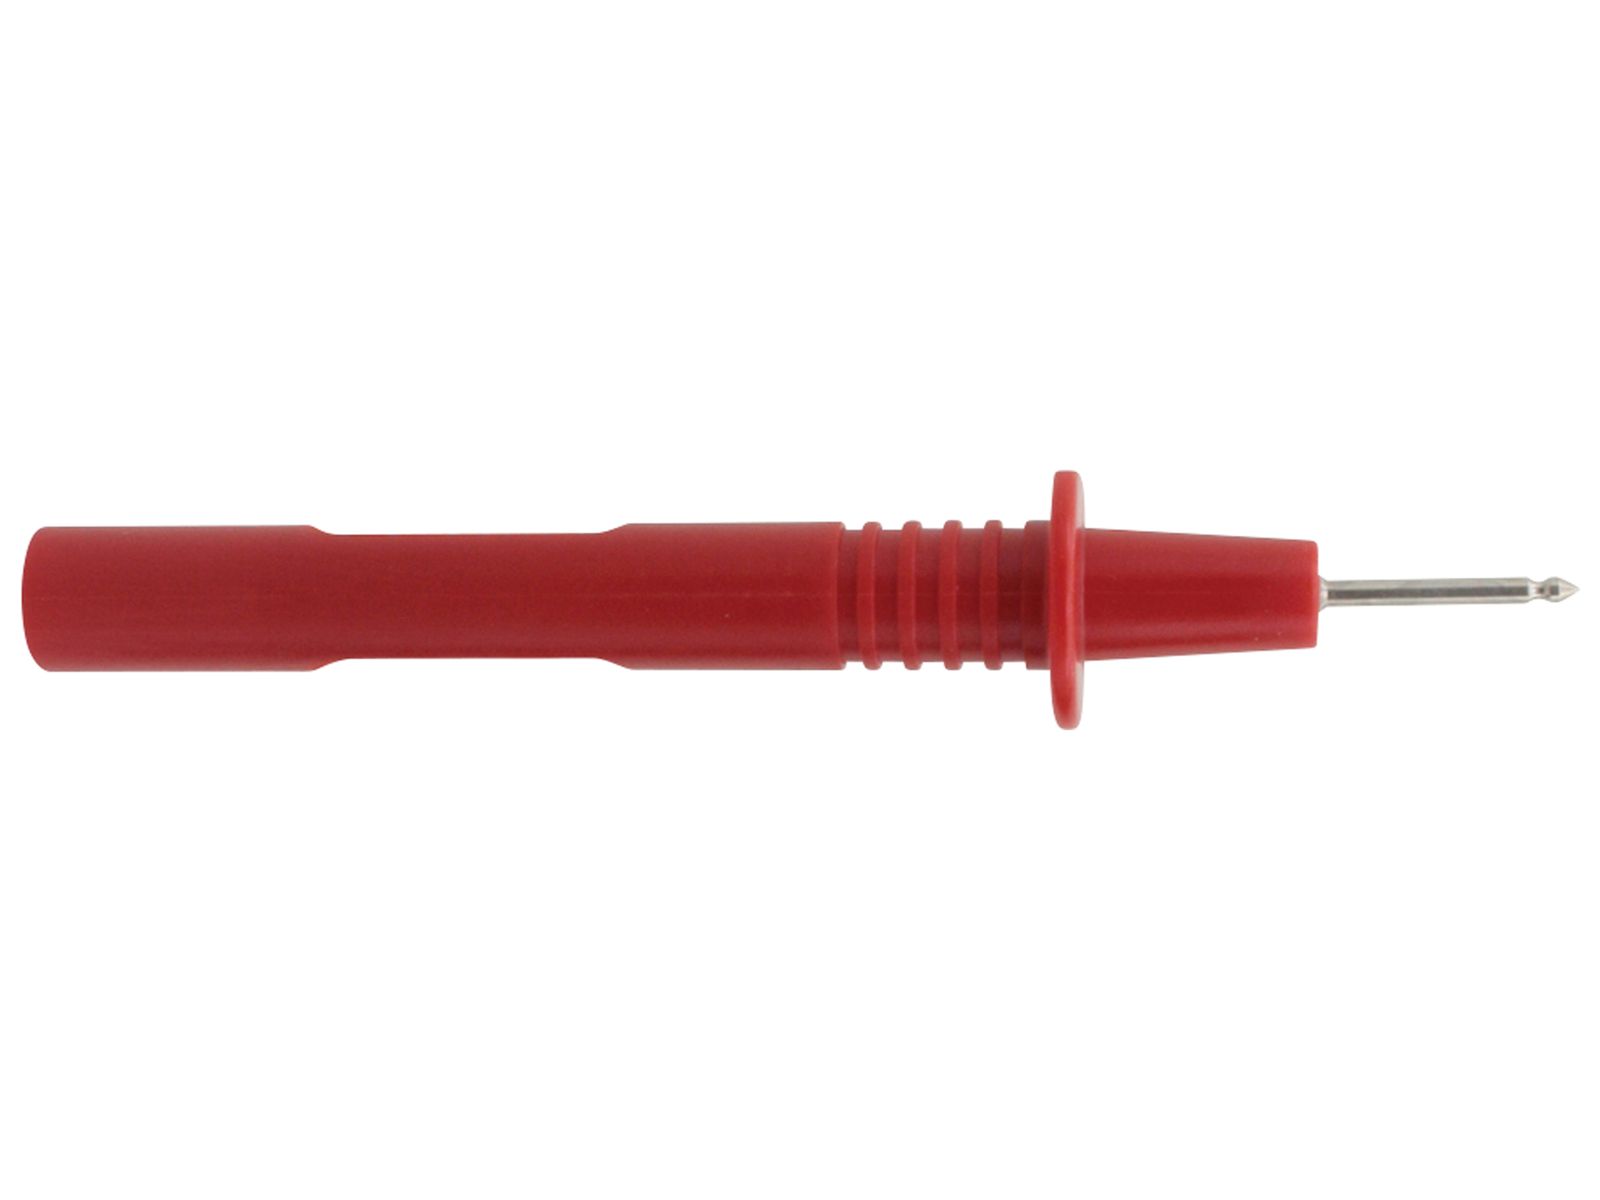 DONAU ELEKTRONIK Stift Testspitze, 2mm, rot, 4020 von Donau Elektronik